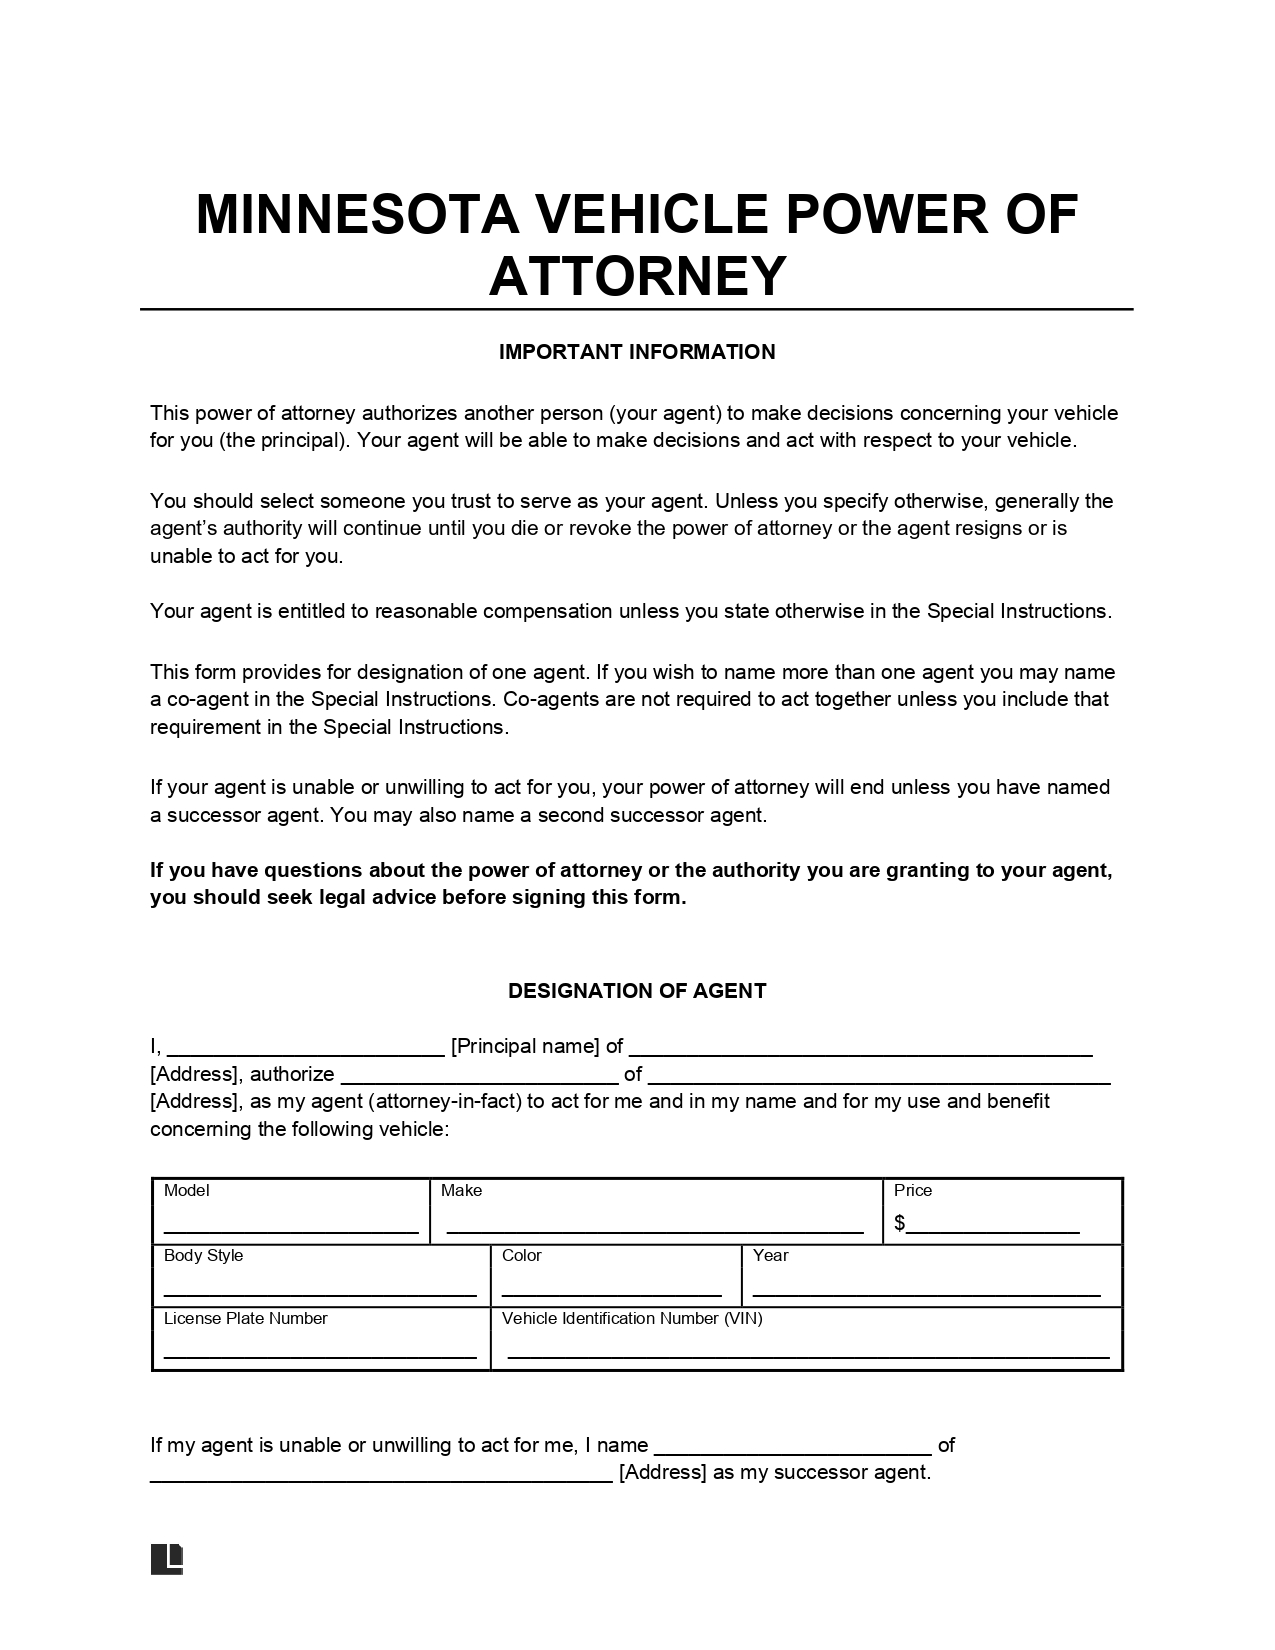 Minnesota Motor Vehicle Power of Attorney Form